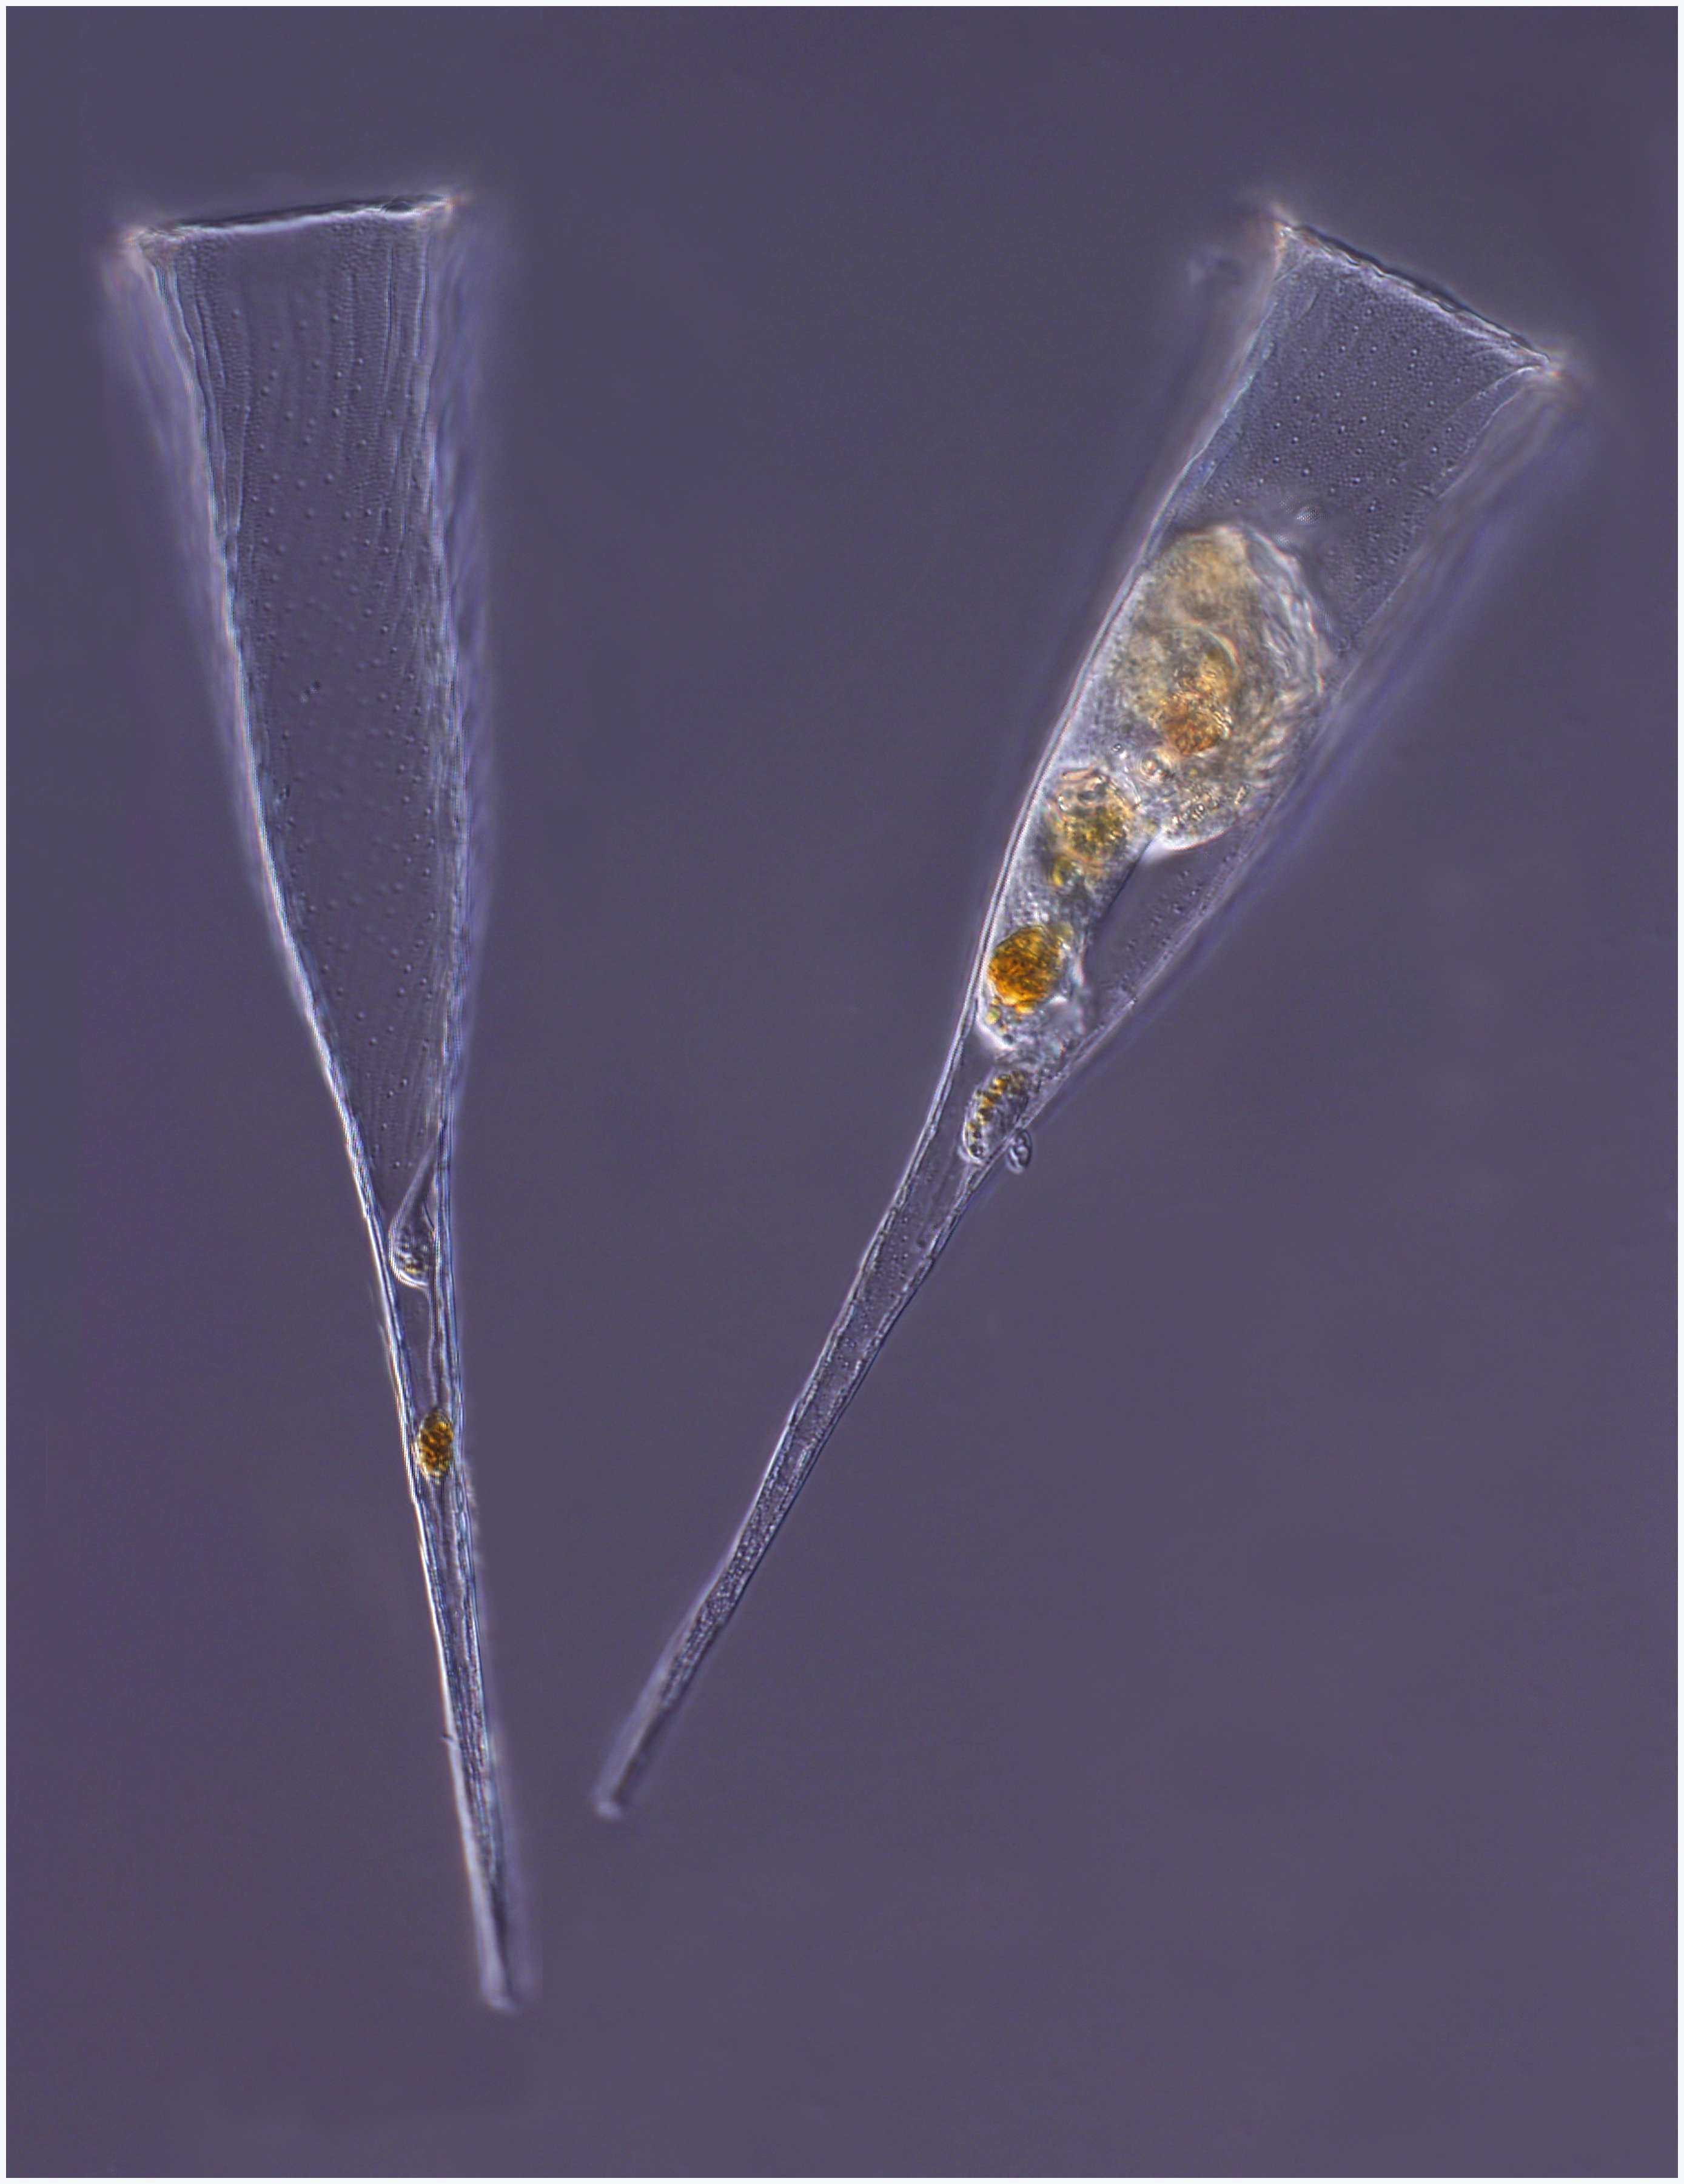 Tintinnid ciliate Rhabdonella spiralis- lorica and live specimen